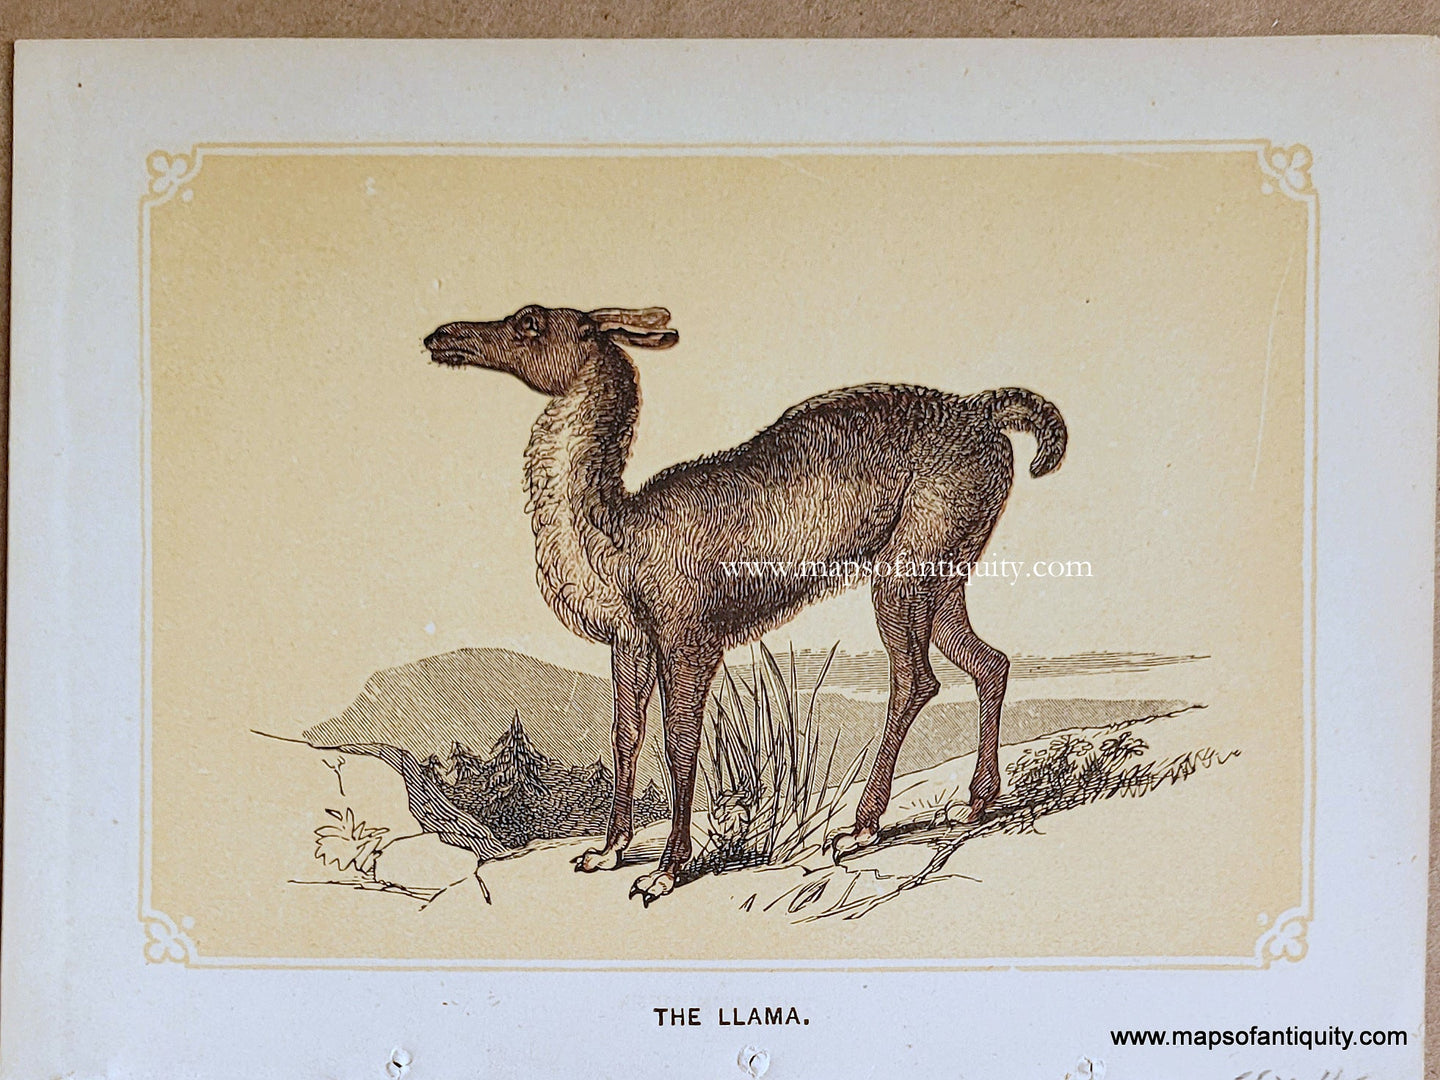 Genuine-Antique-Print-The-Llama-1850s-Tallis-Maps-Of-Antiquity